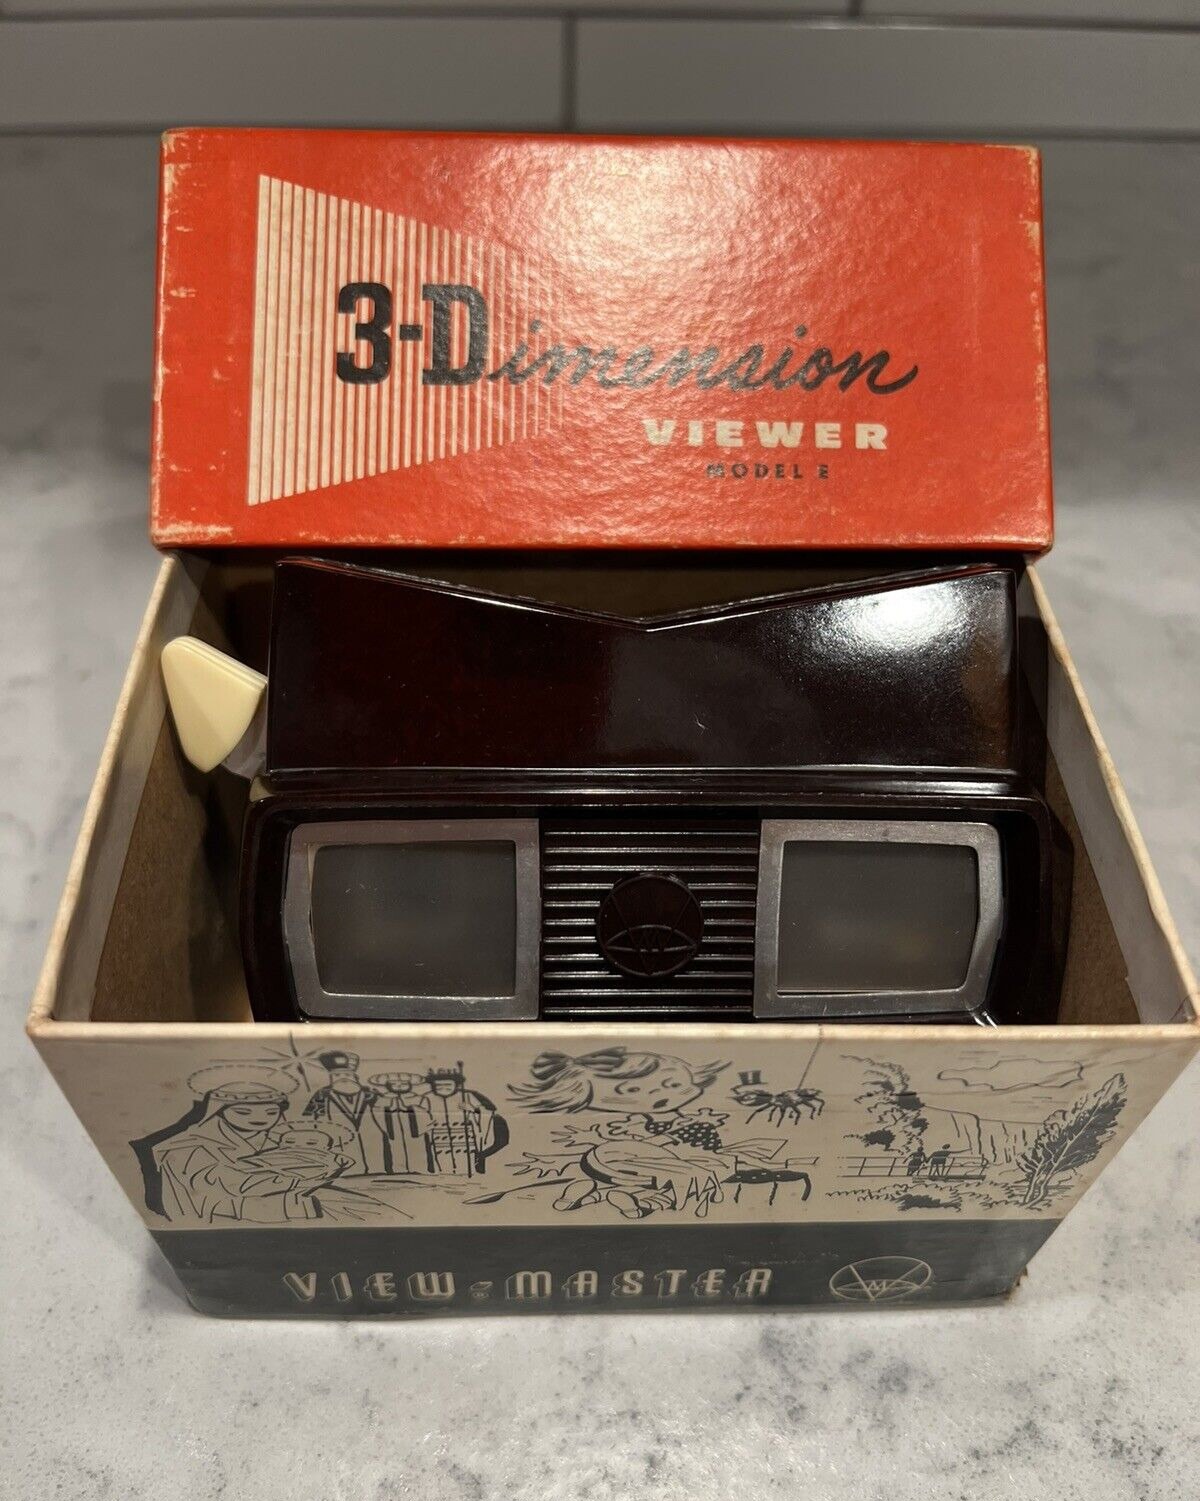 Vintage Sawyer’s View-Master 3-Dimension Viewer Model E Original Box